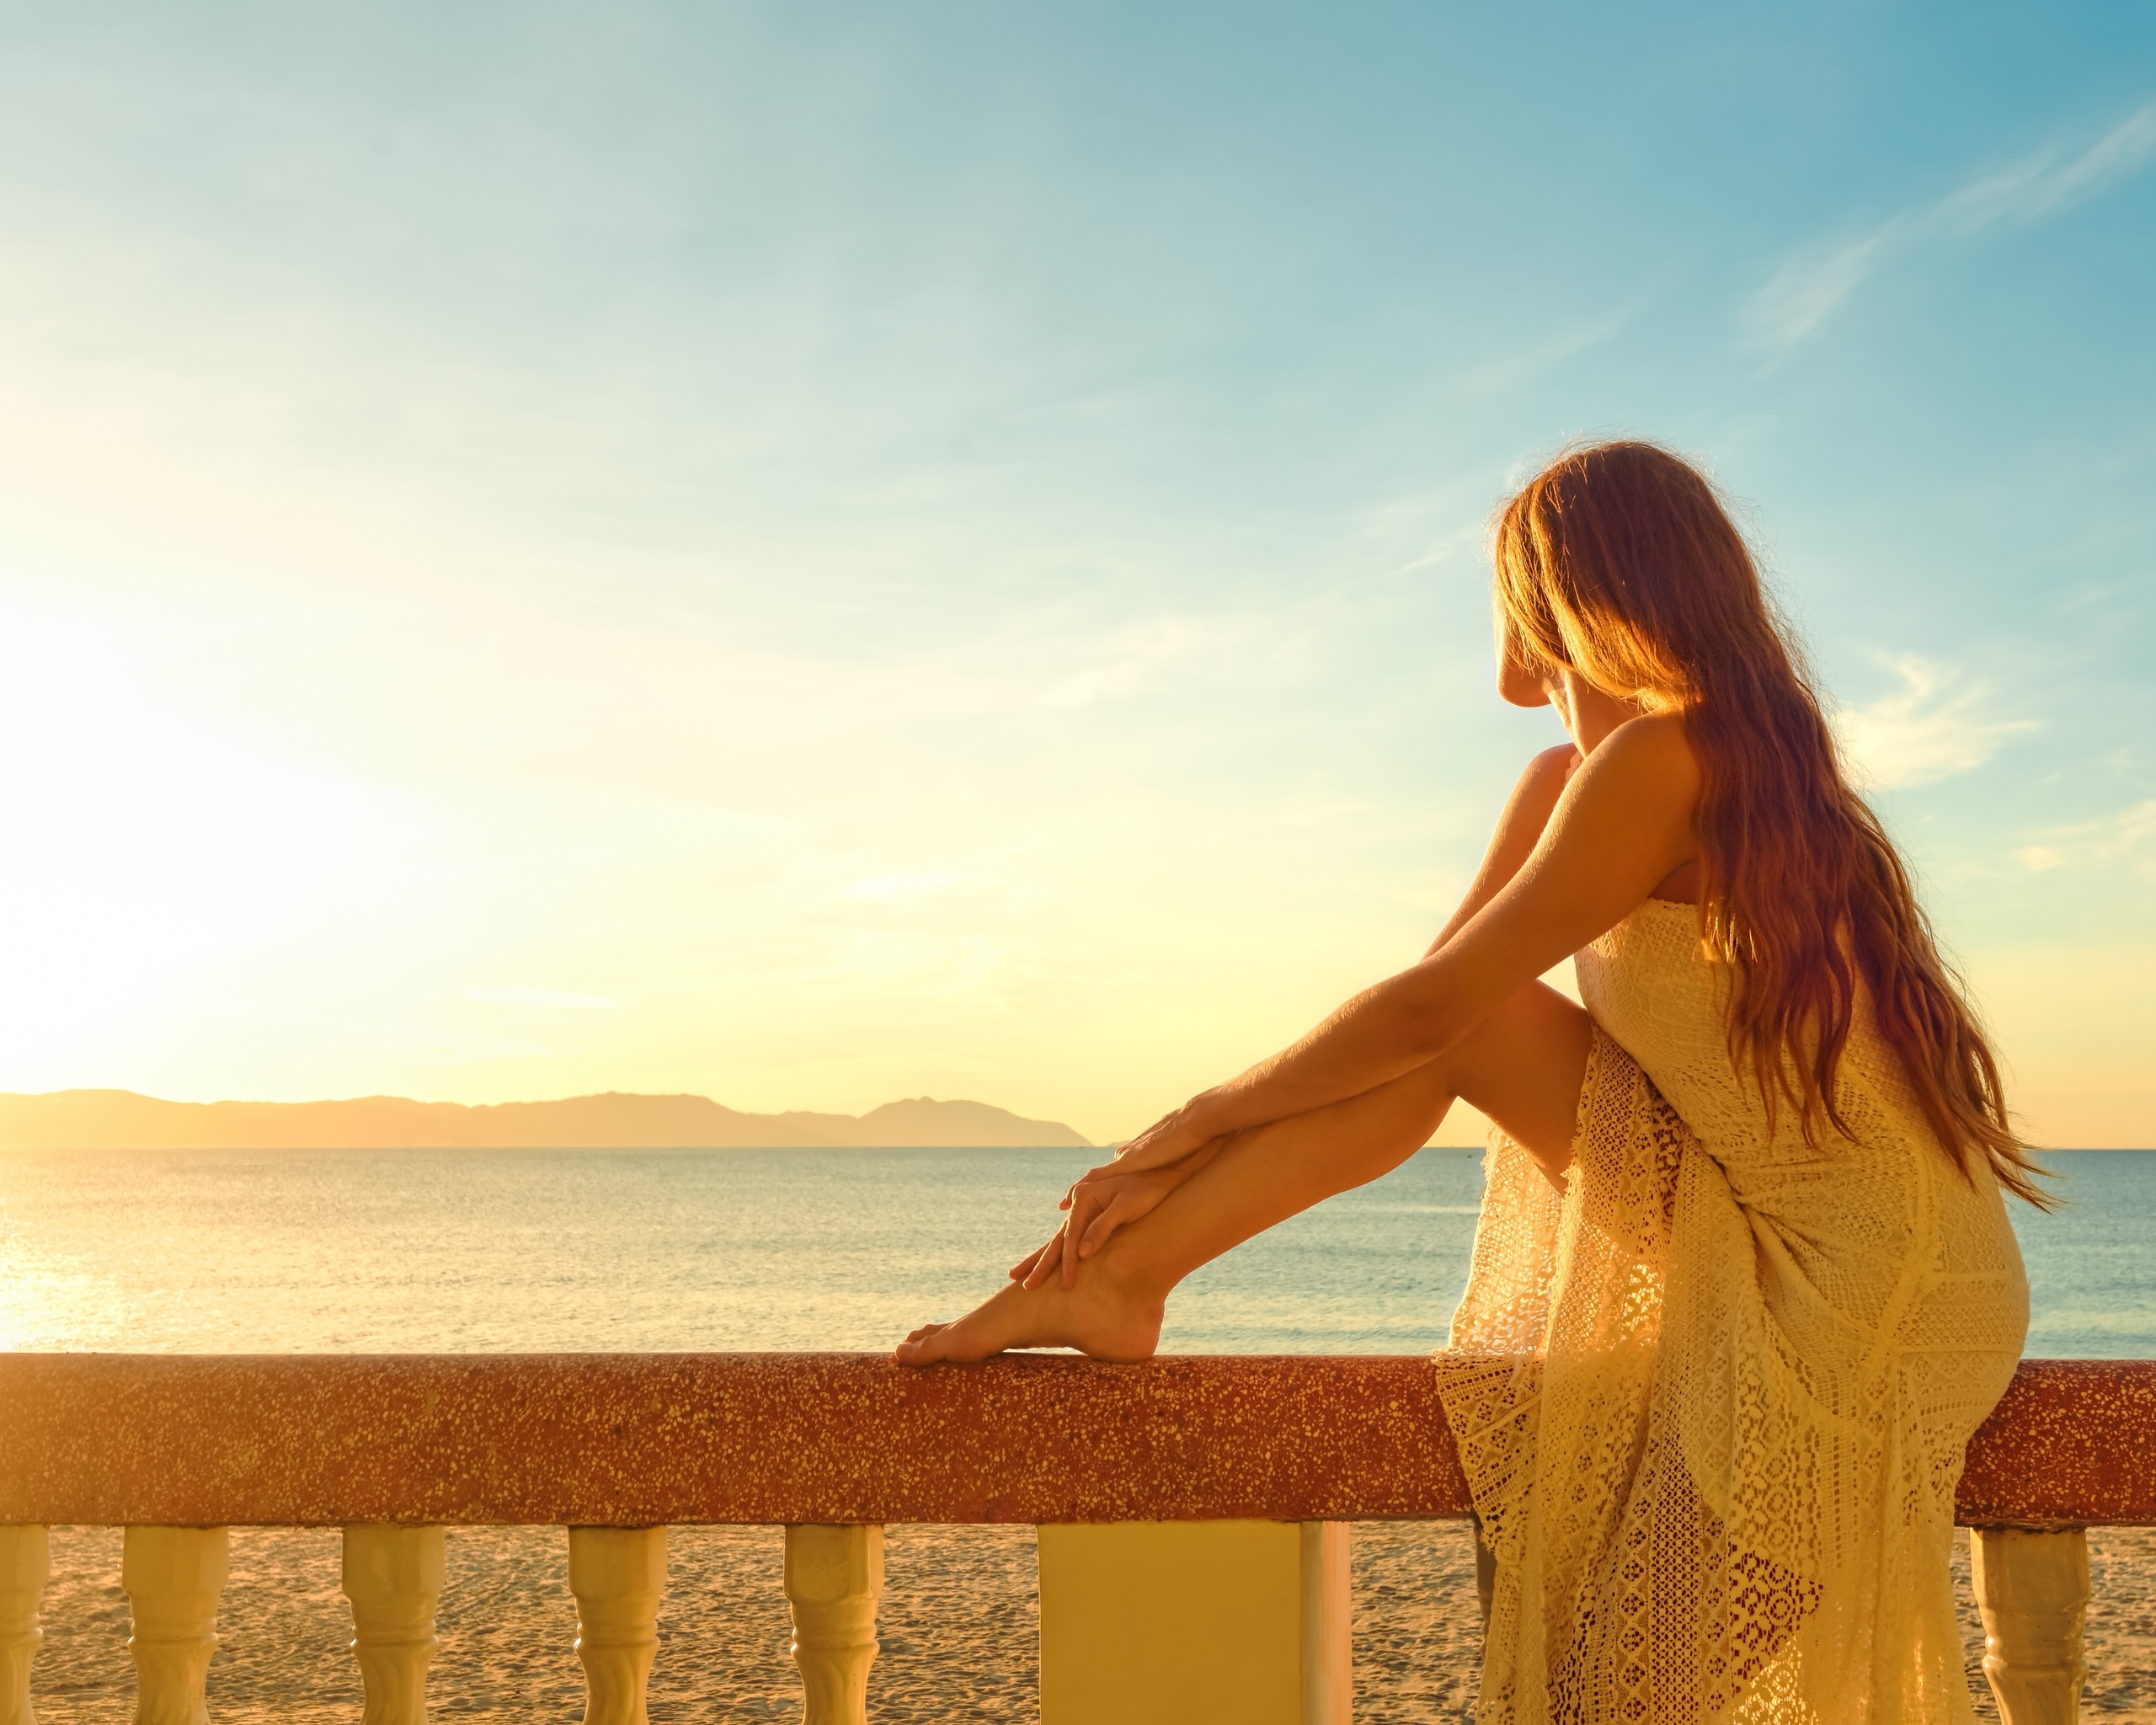 Image: Girl, dress, sitting, railing, sea, mountains, sky, sunset